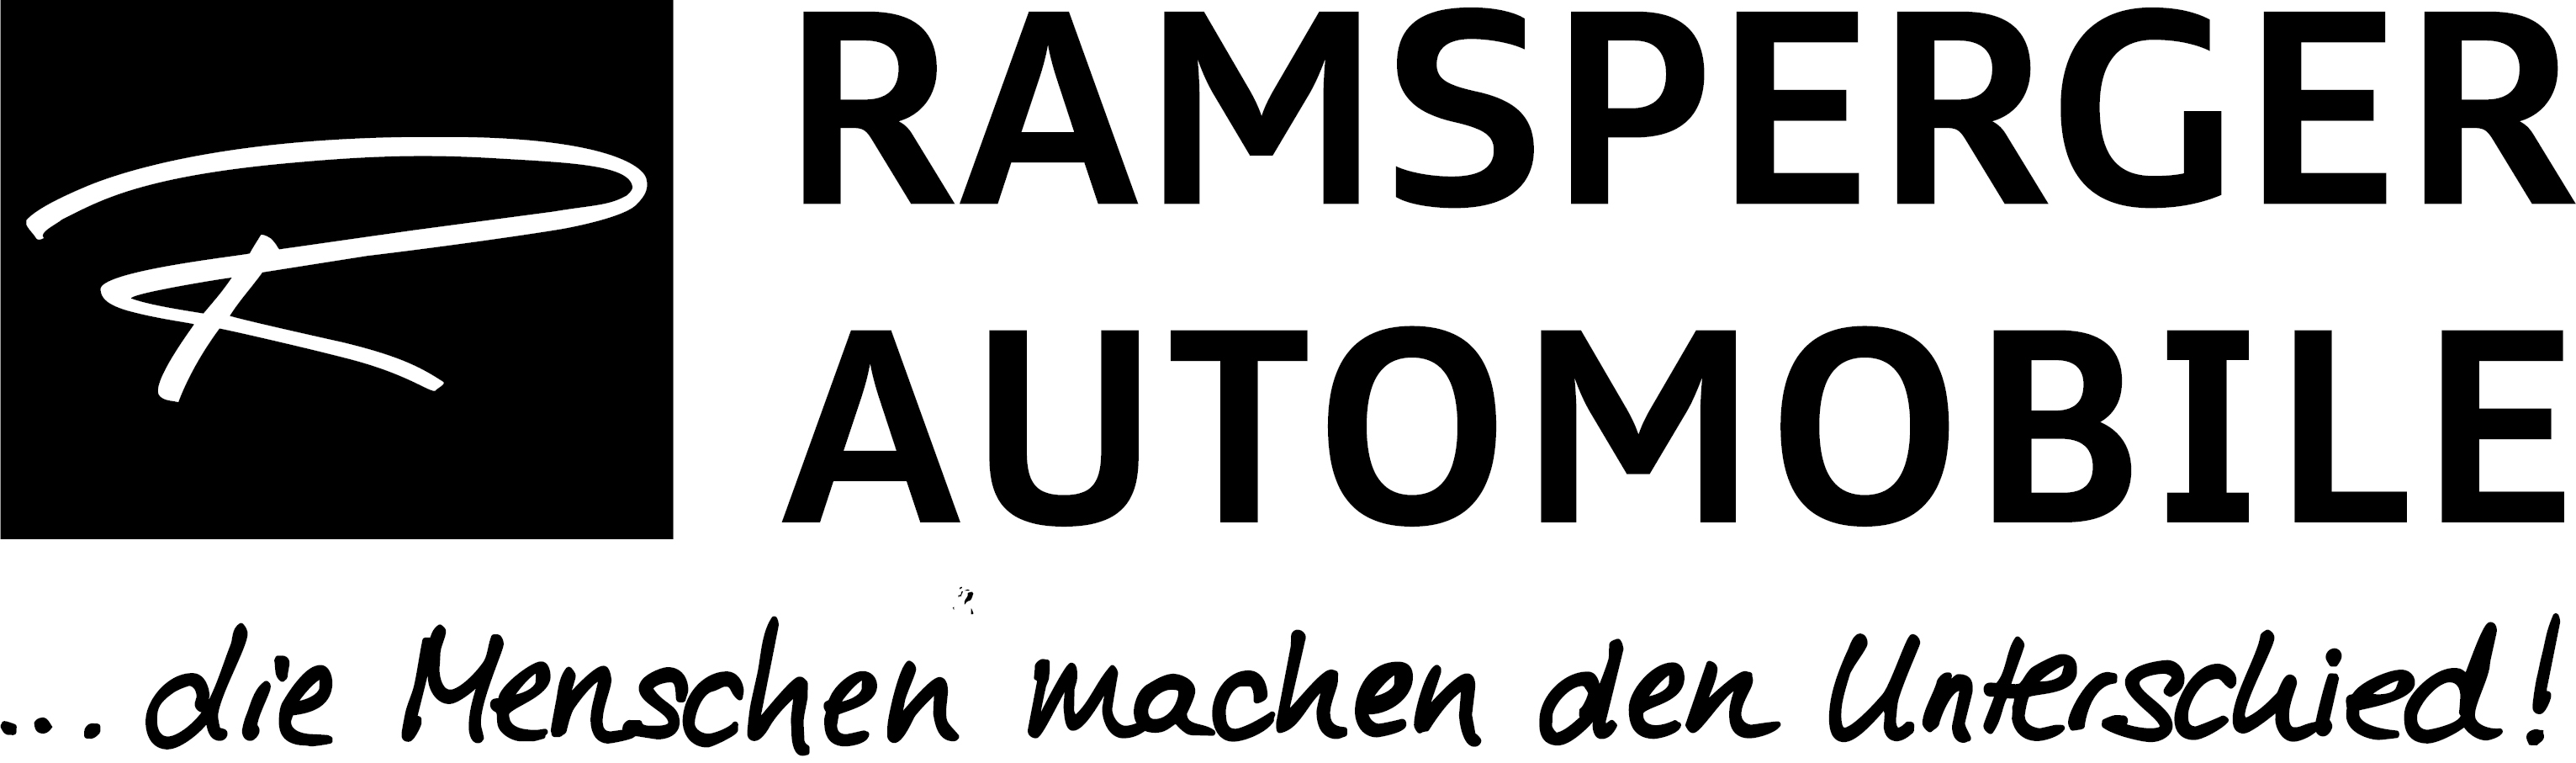 Ramsperger Logo links sw mit Claim